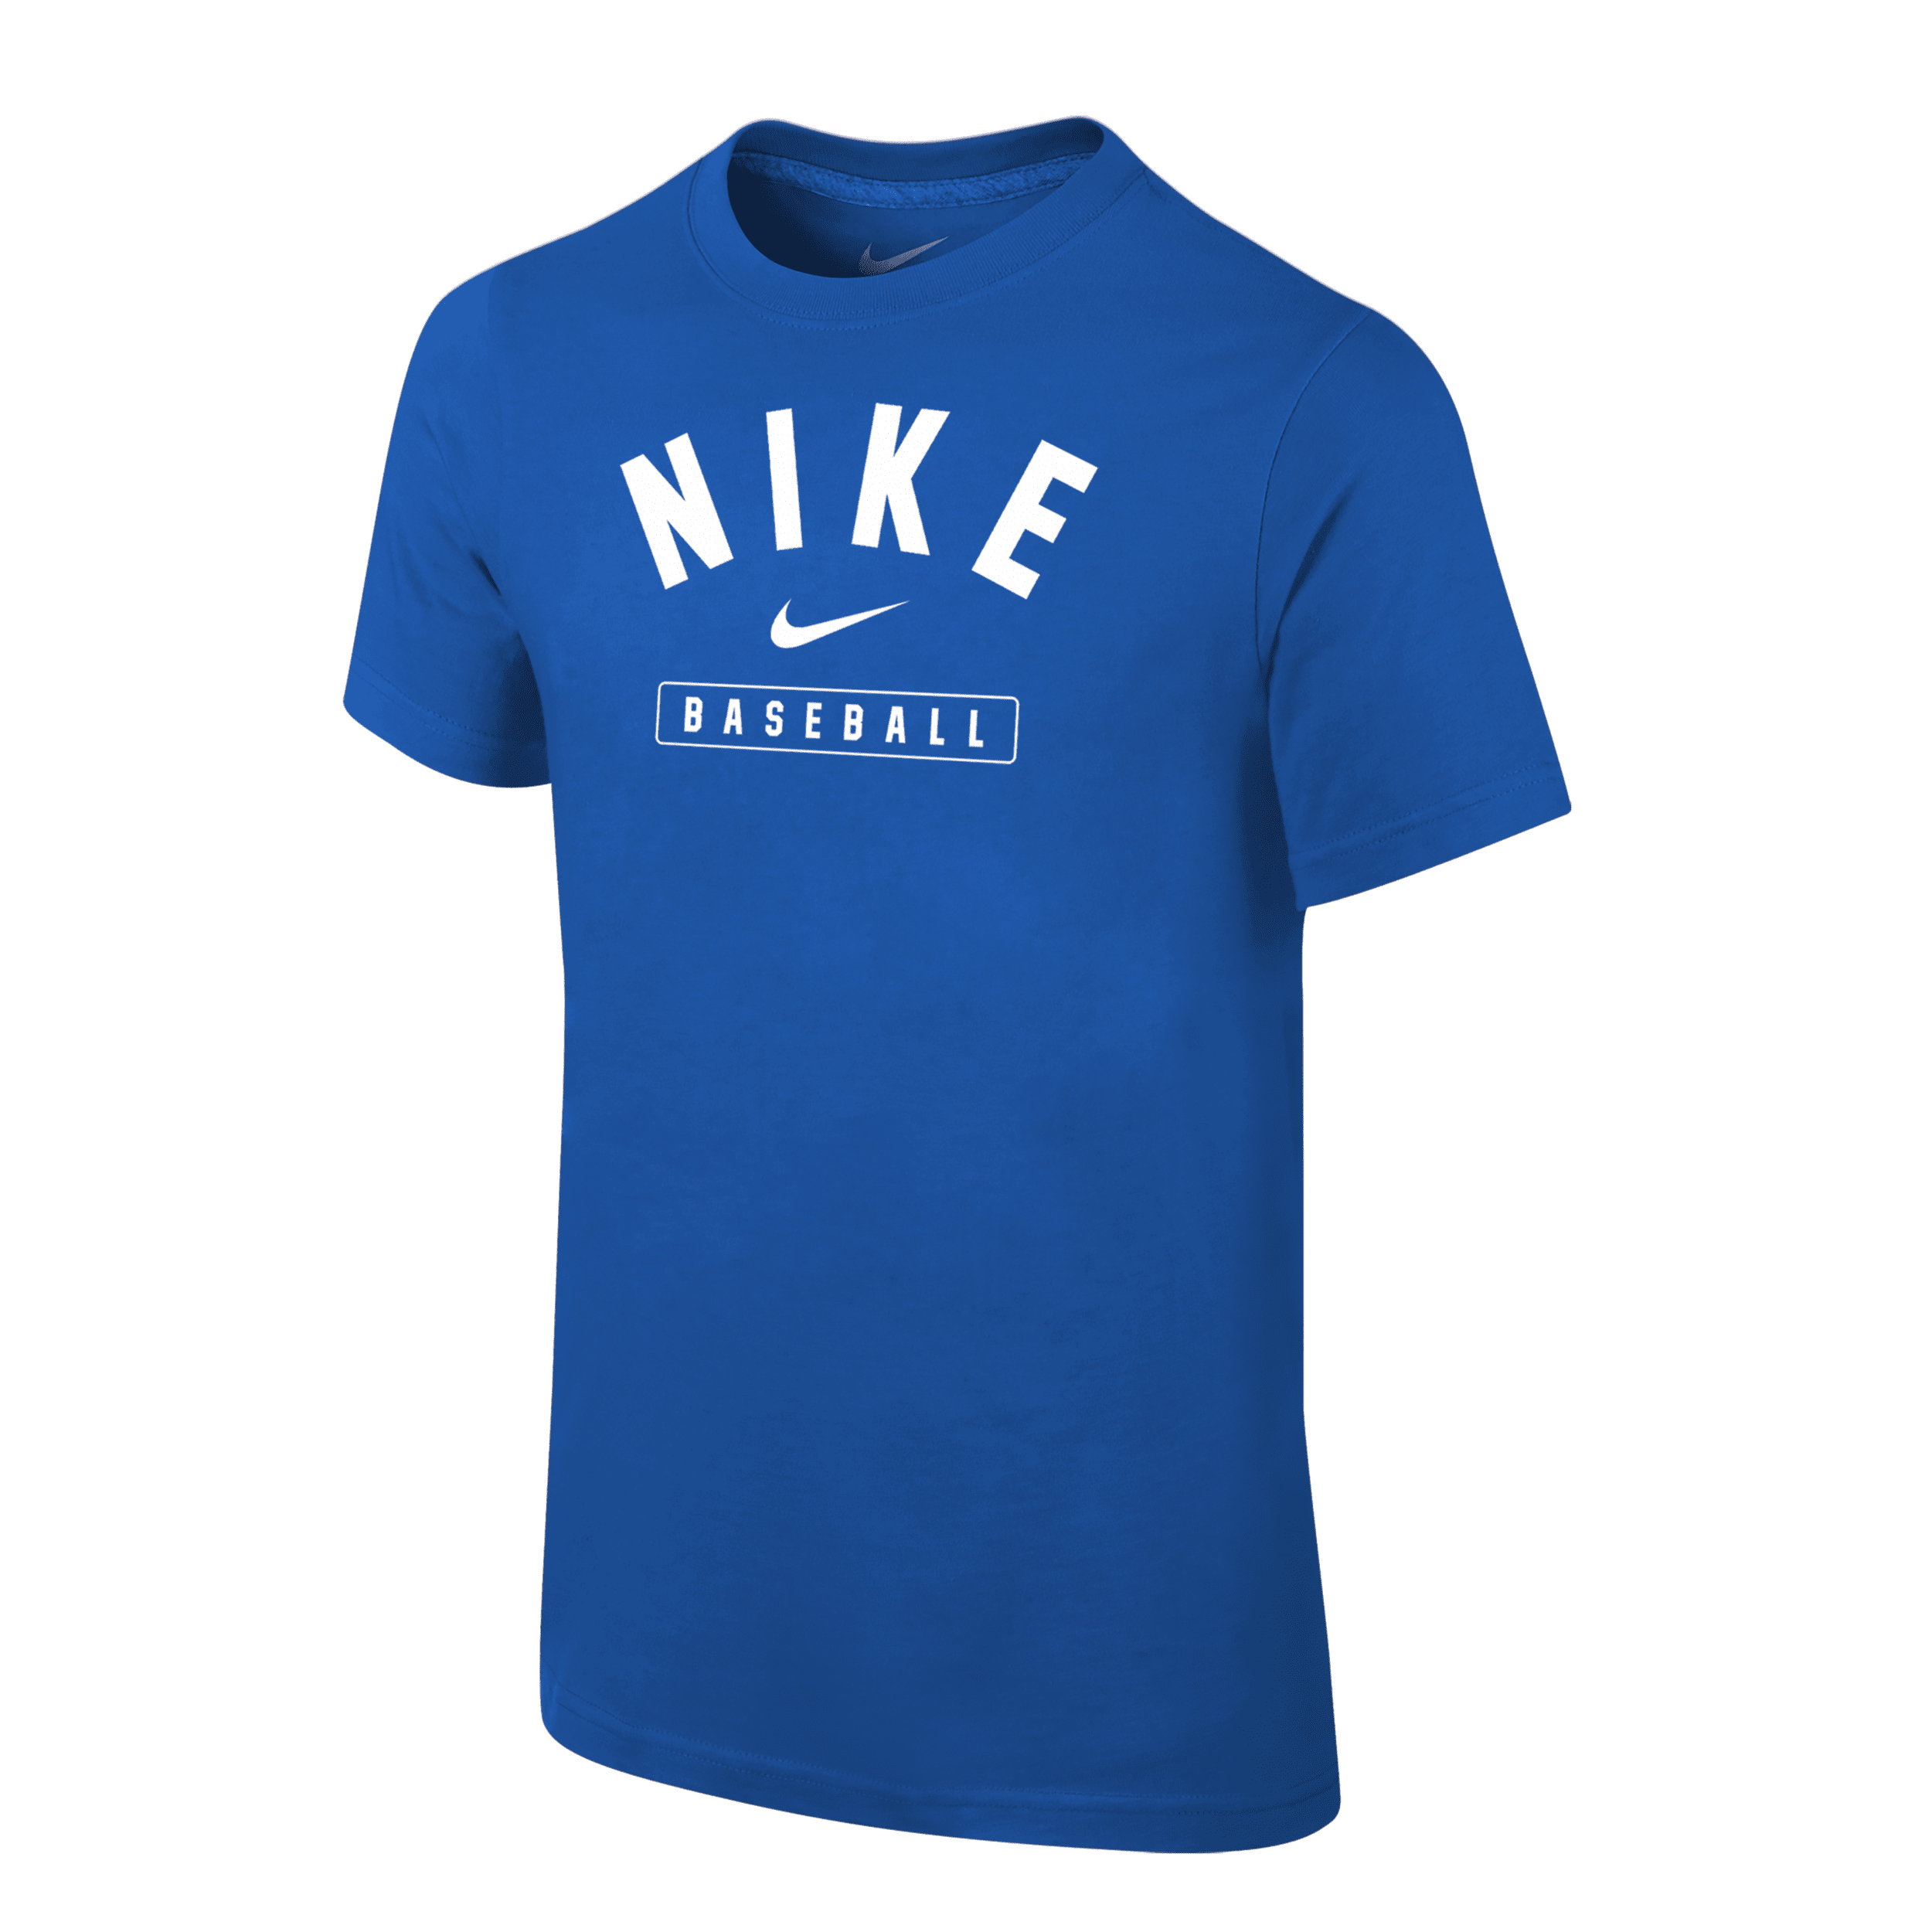 Nike Baseball Big Kids' (boys') T-shirt In Blue